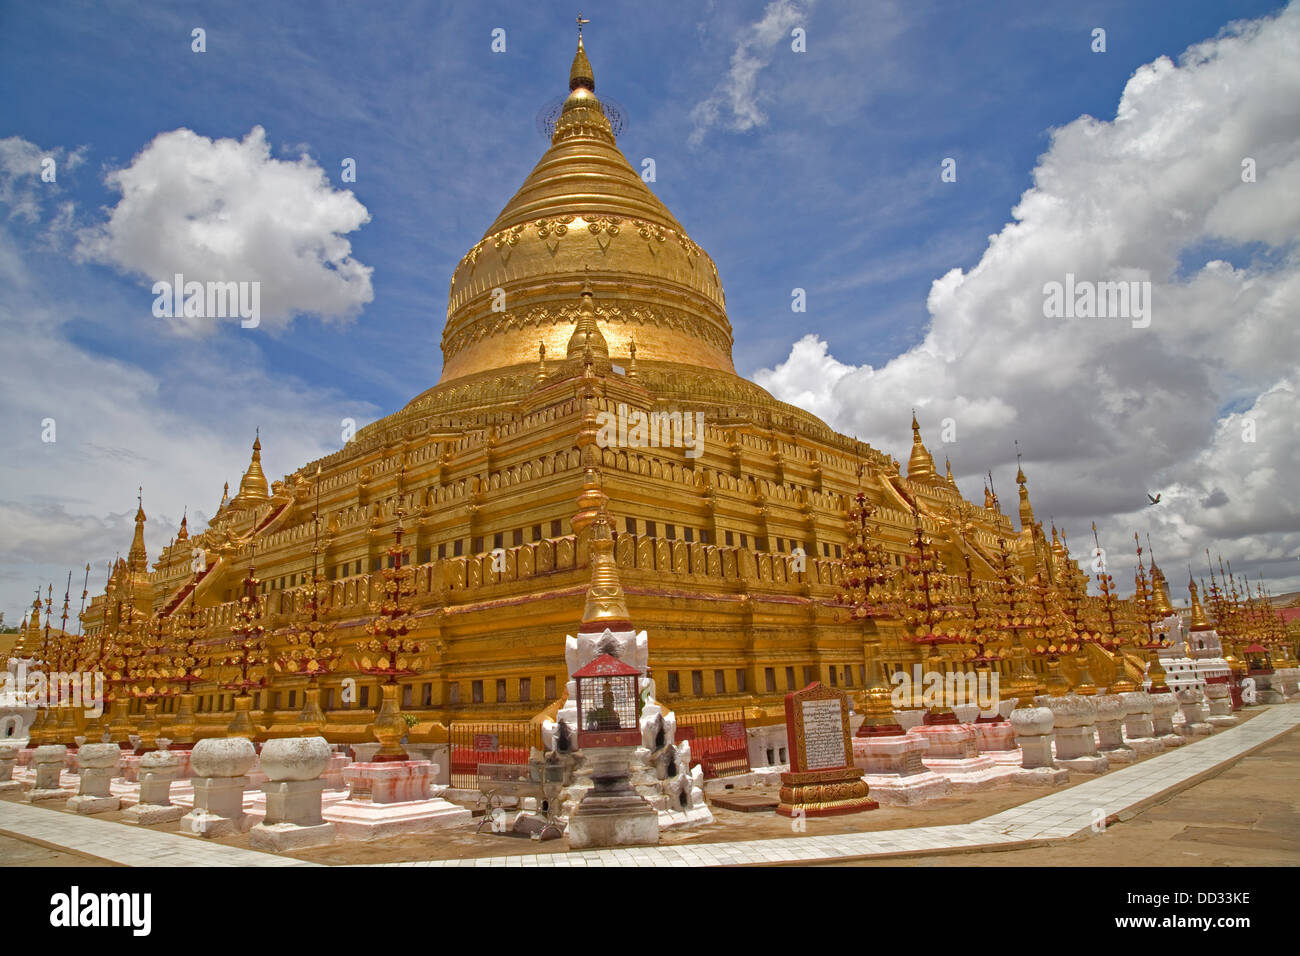 The Shwezigon Pagoda or Shwezigon Paya is a Buddhist temple located in Nyaung-U, a town near Bagan, in Burma, built by King Anaw Stock Photo